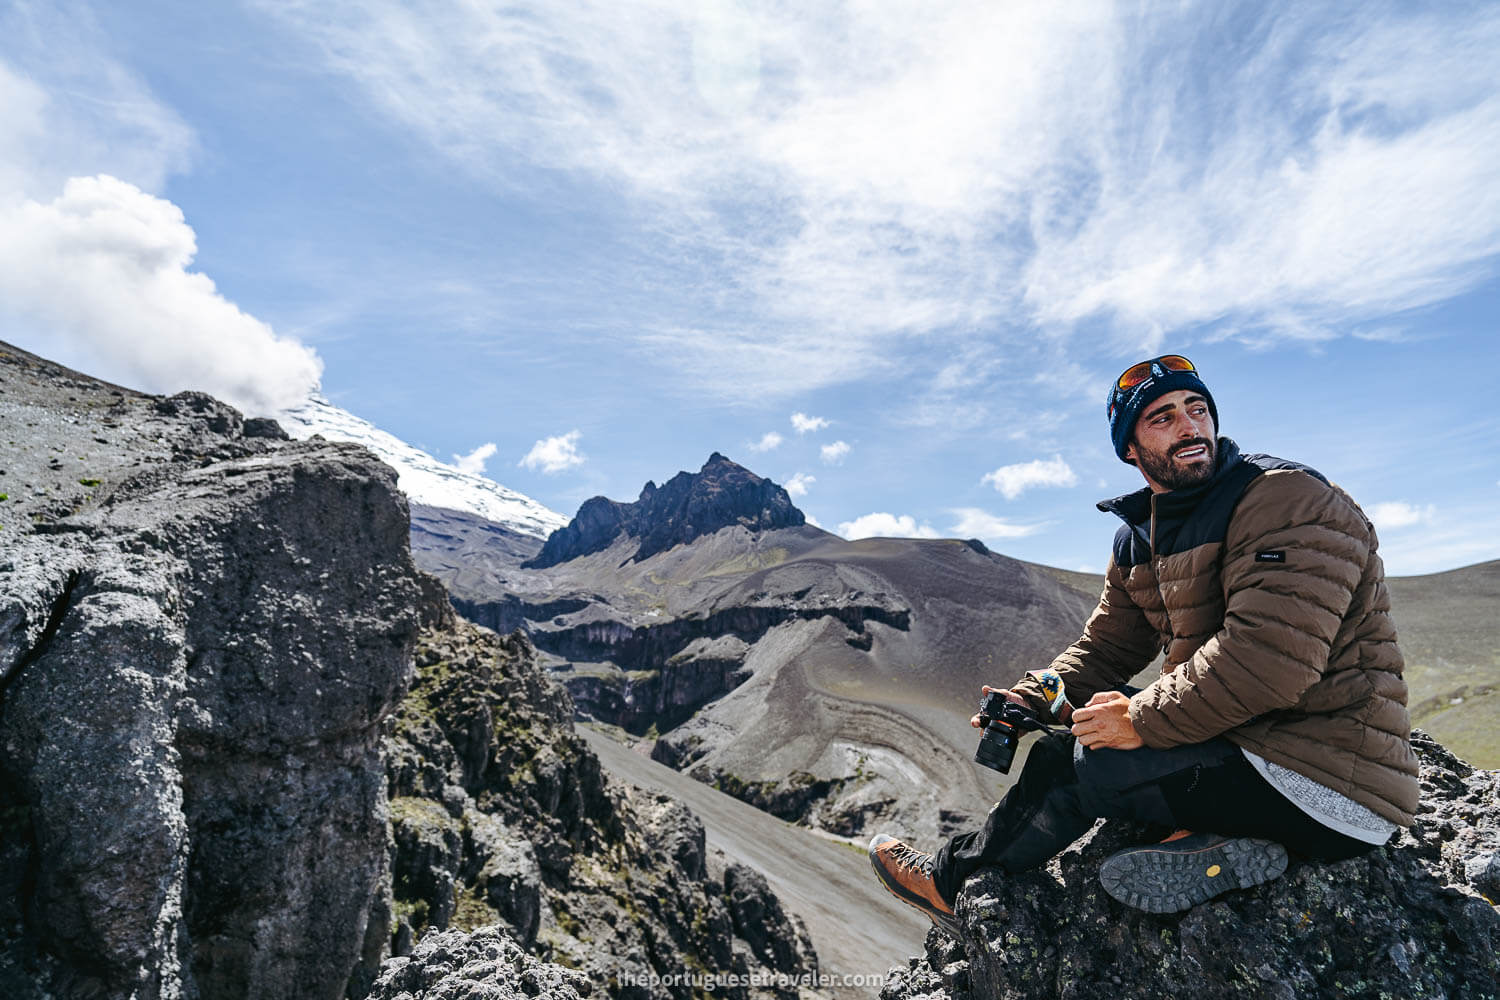 Miguel and the Cerro Morurco